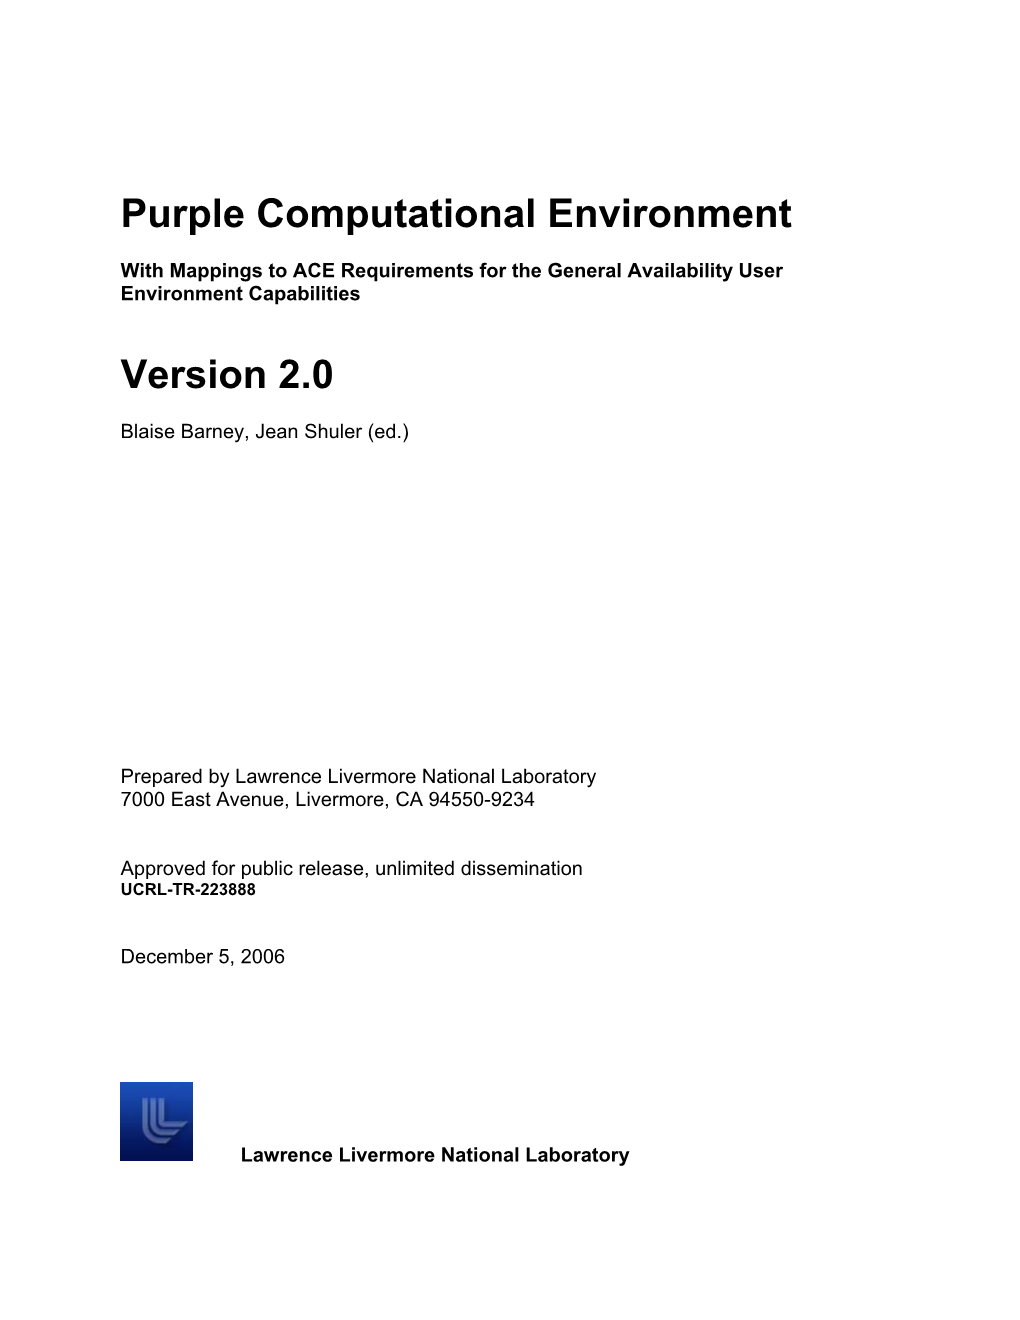 Purple Computational Environment Version 2.0